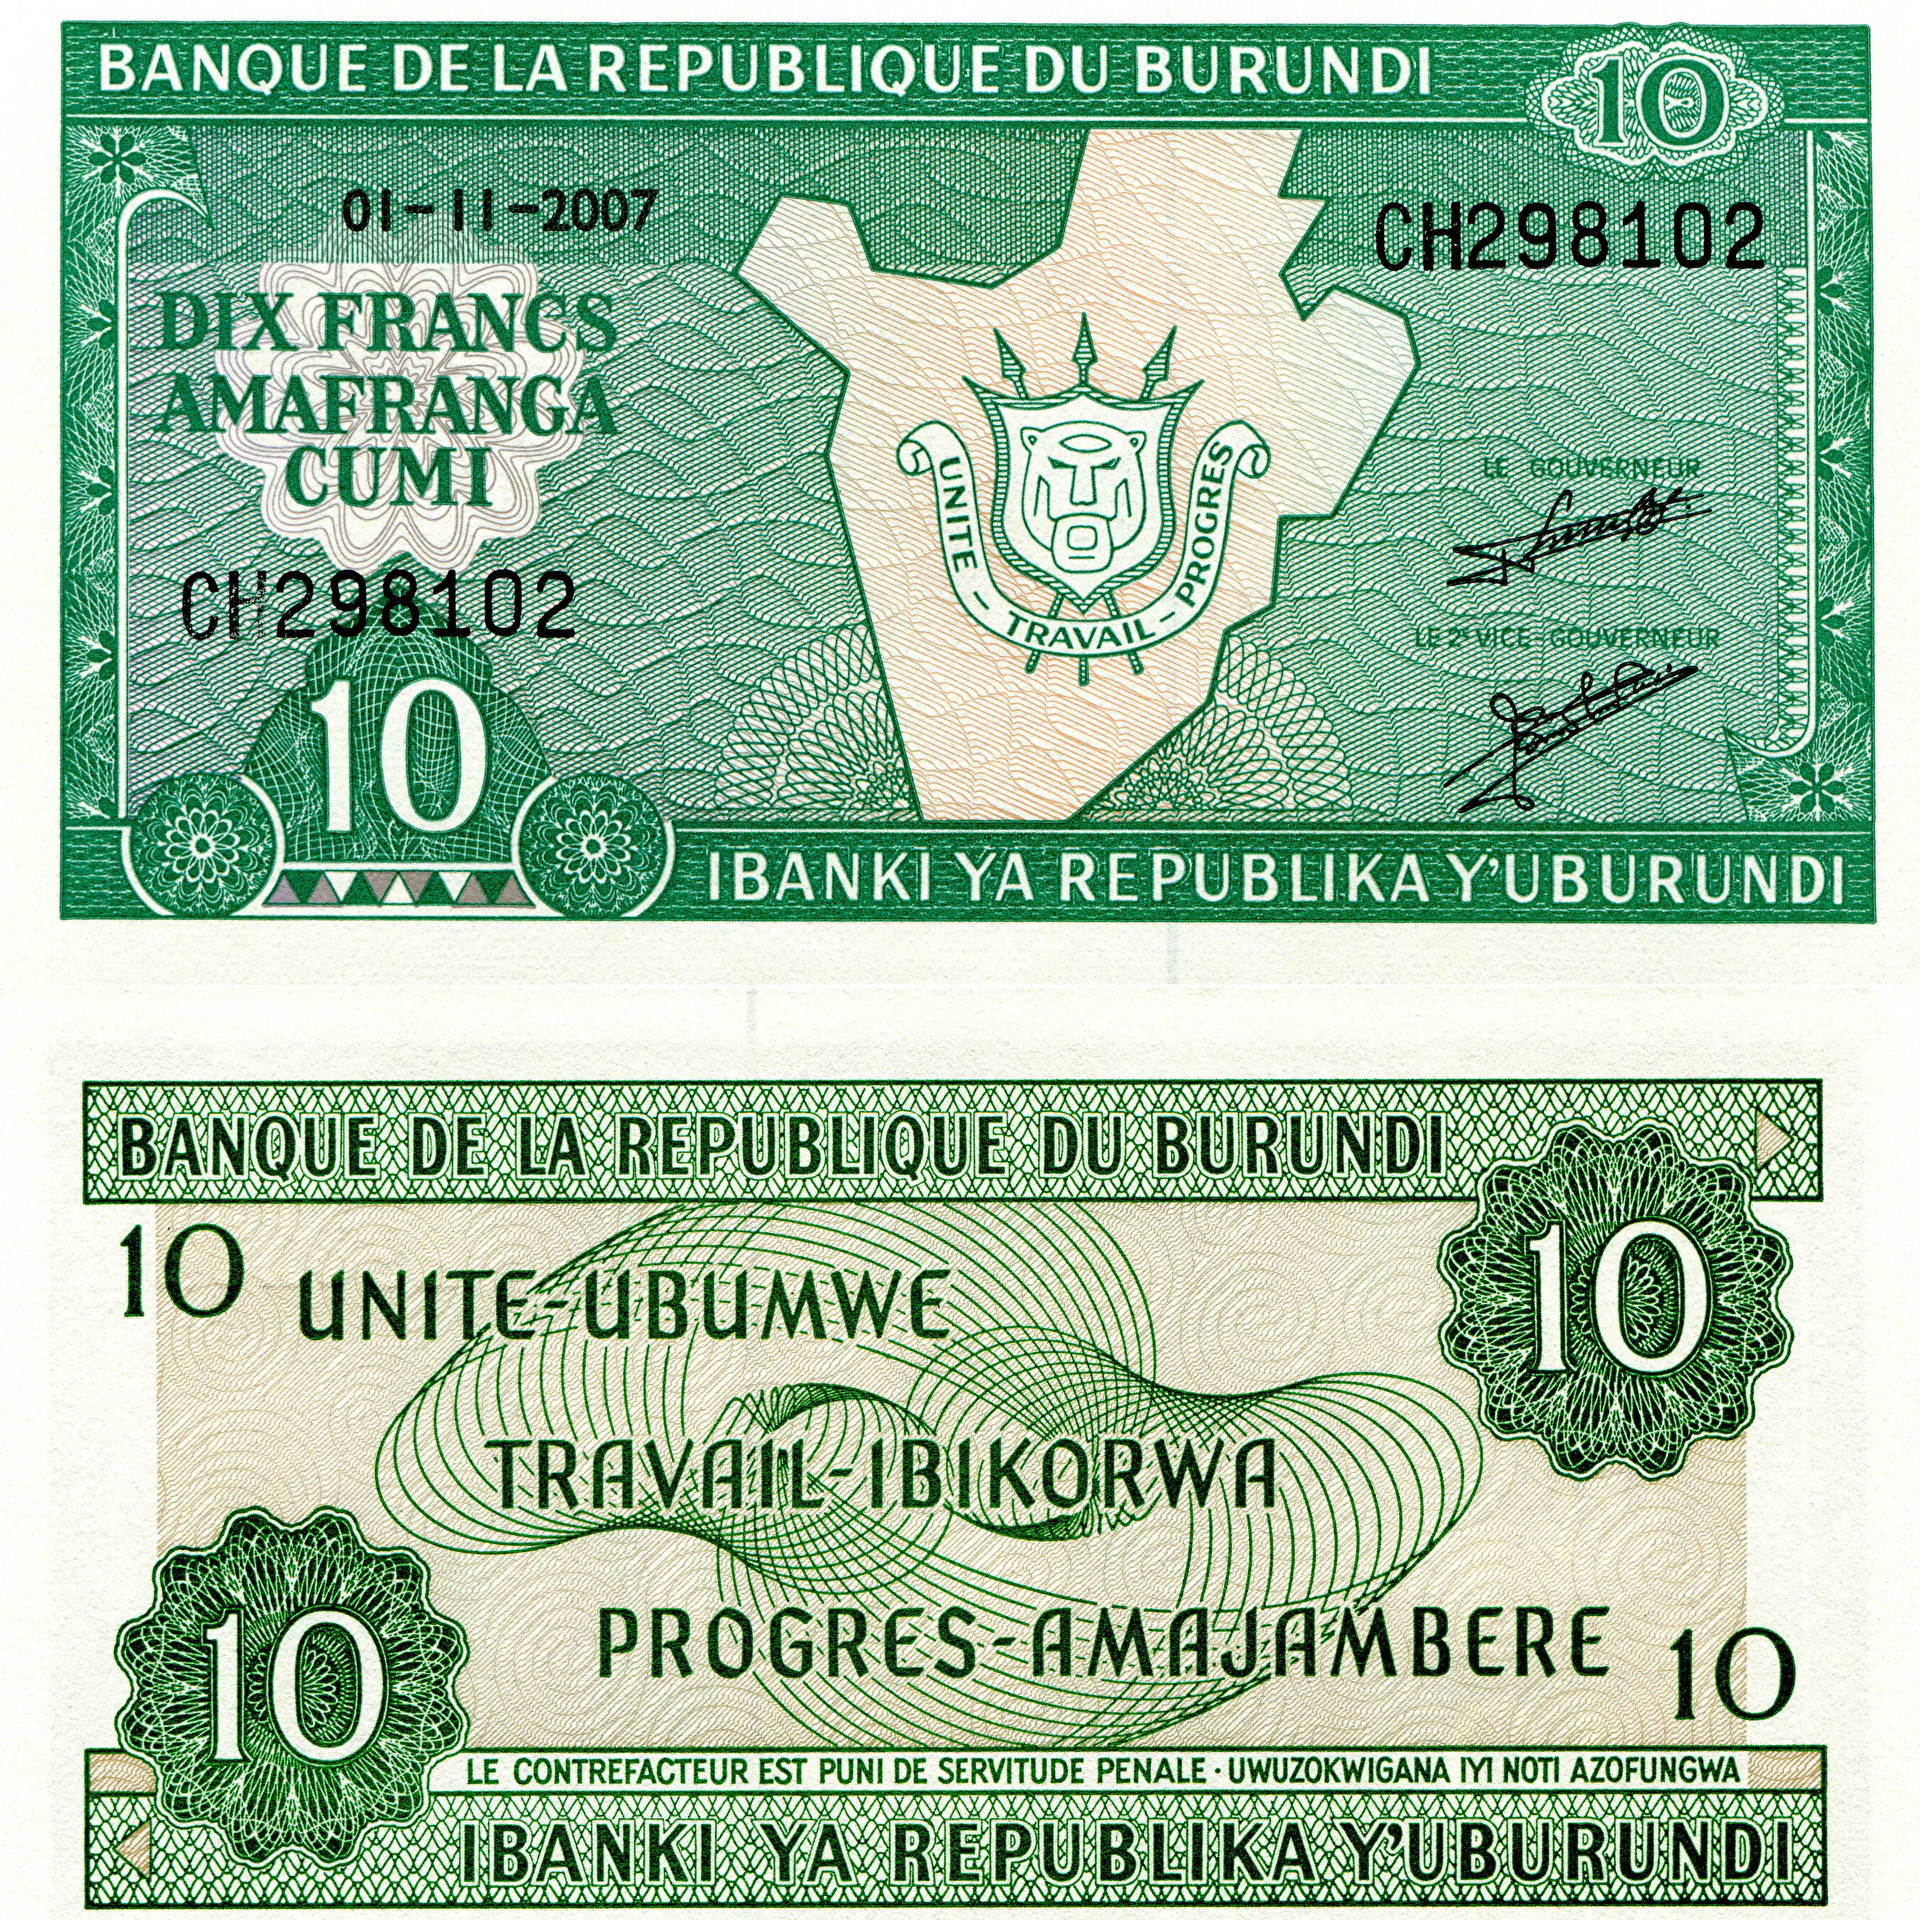 Burundi Franc Currency